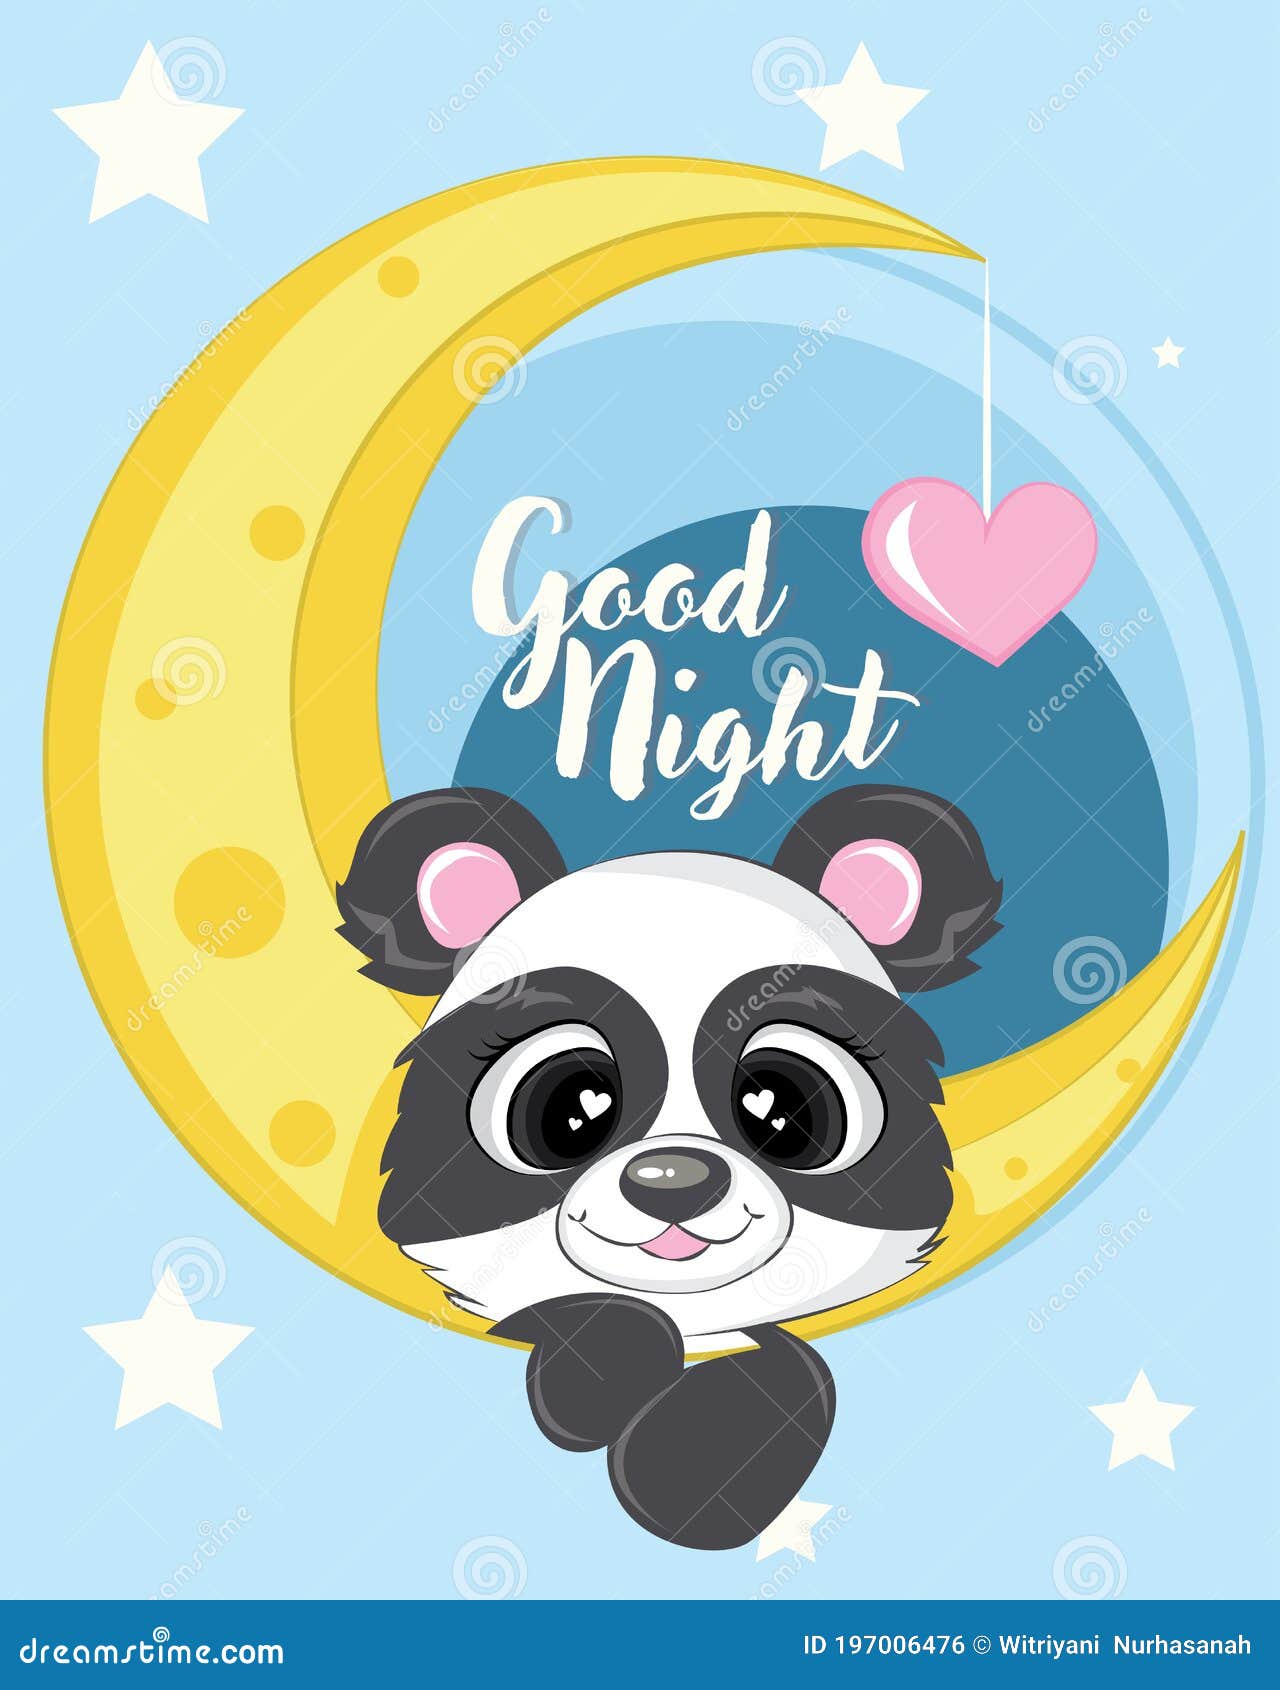 Good Night Panda Illustration Vector for Print Design. Birthday Card ...